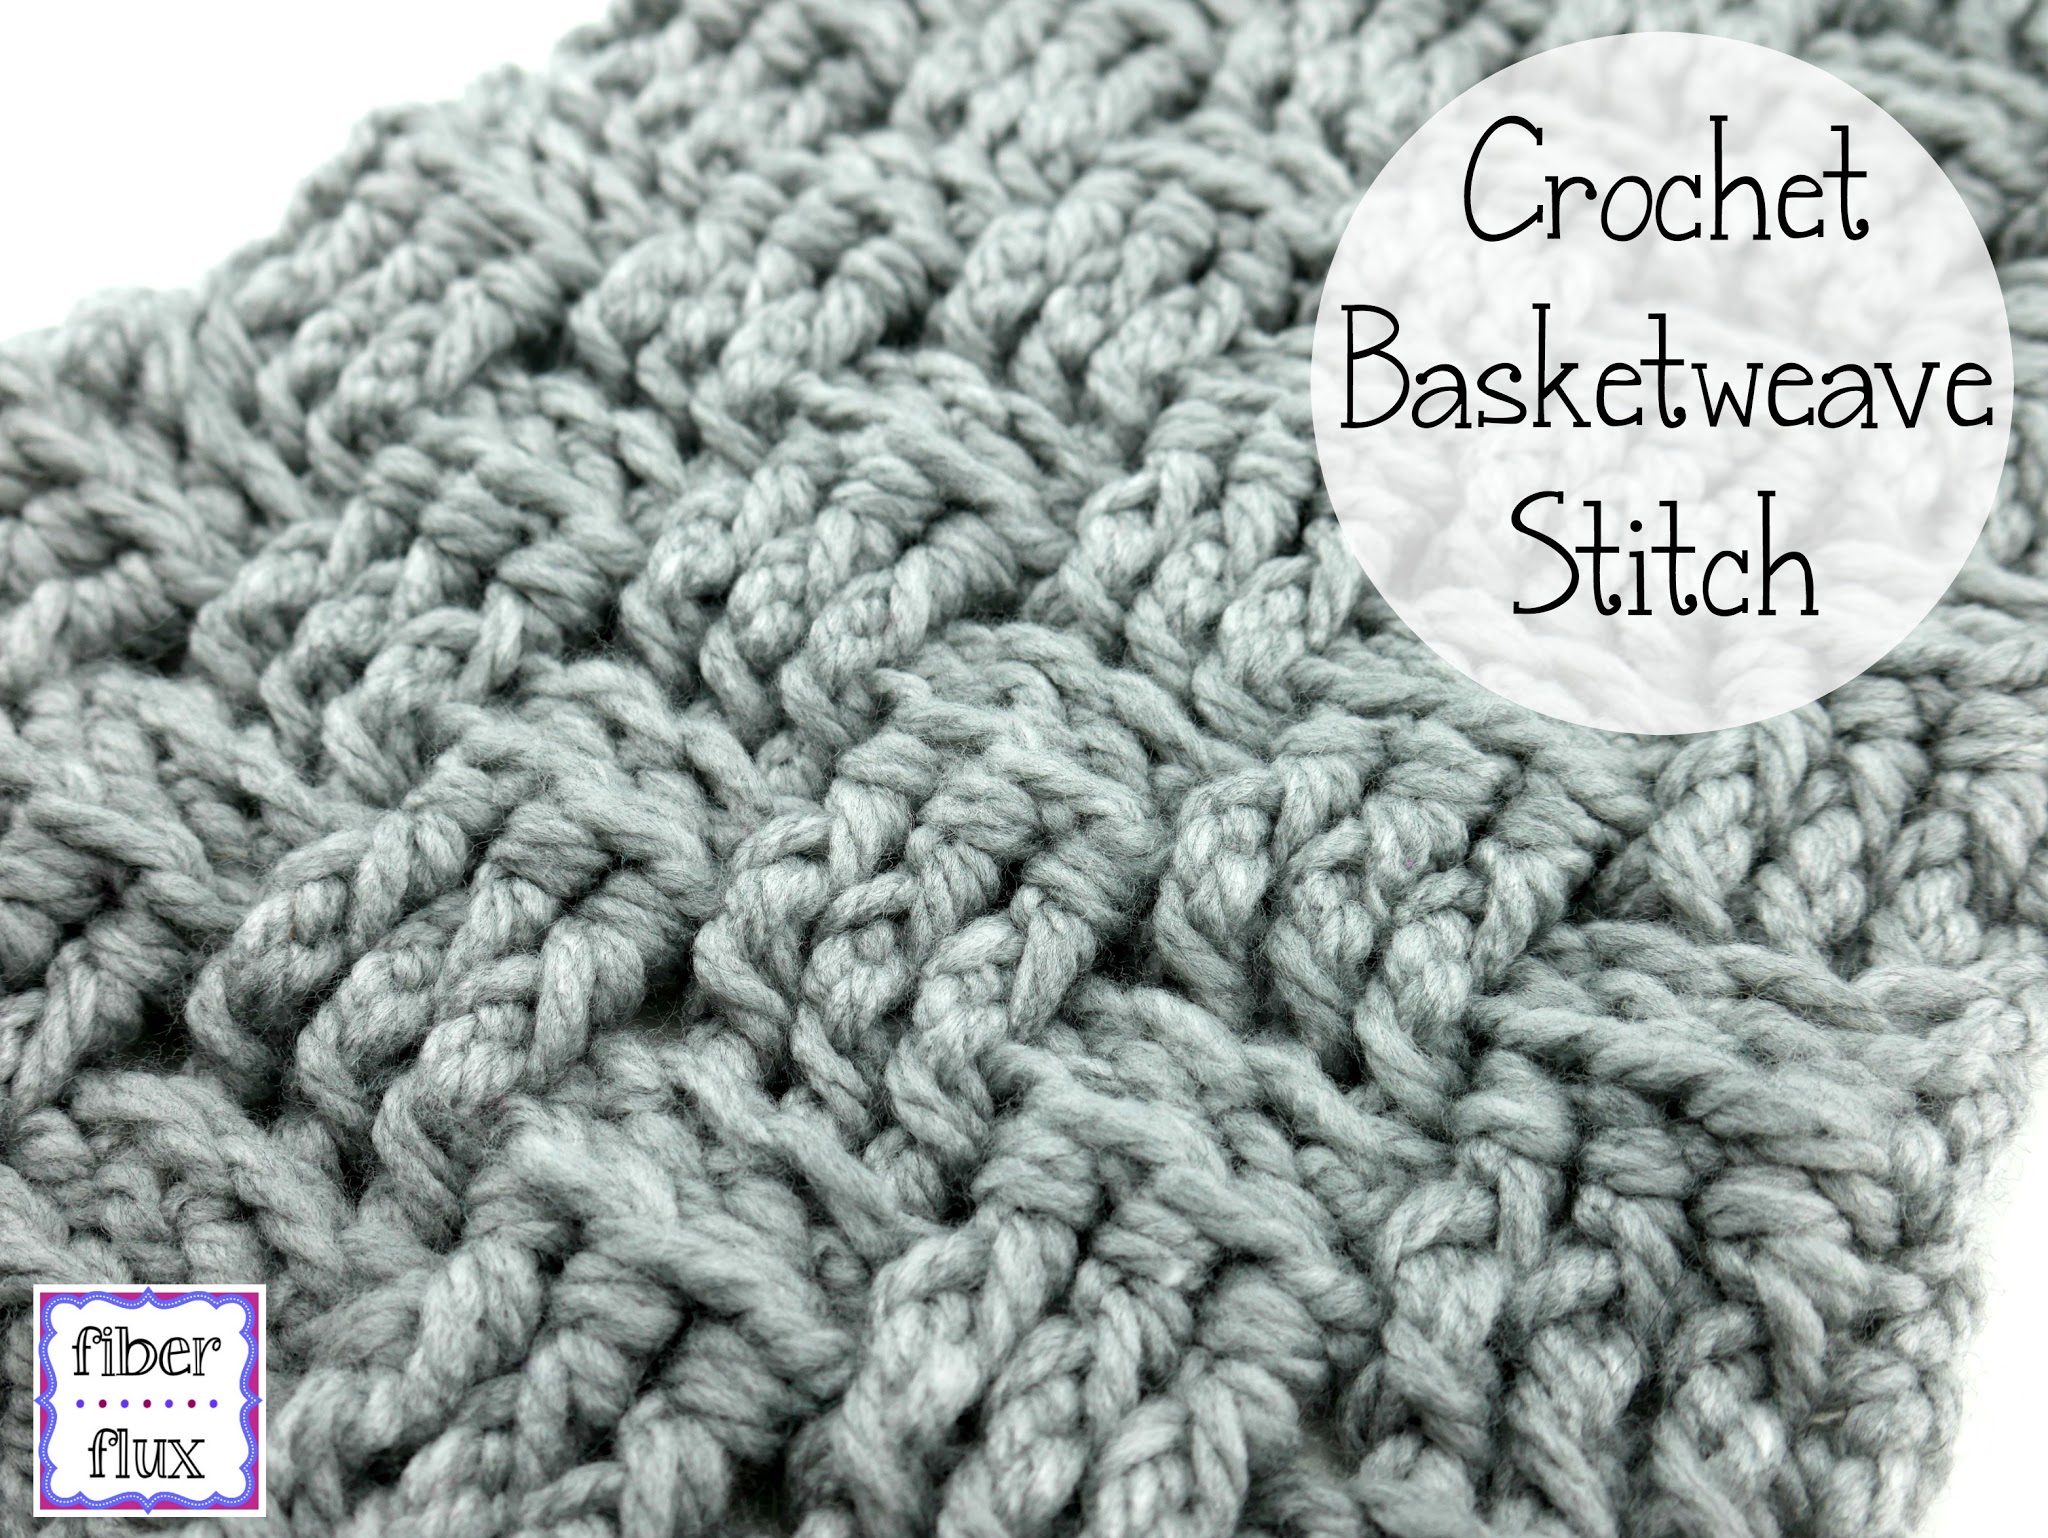 Basket Weave Stitch